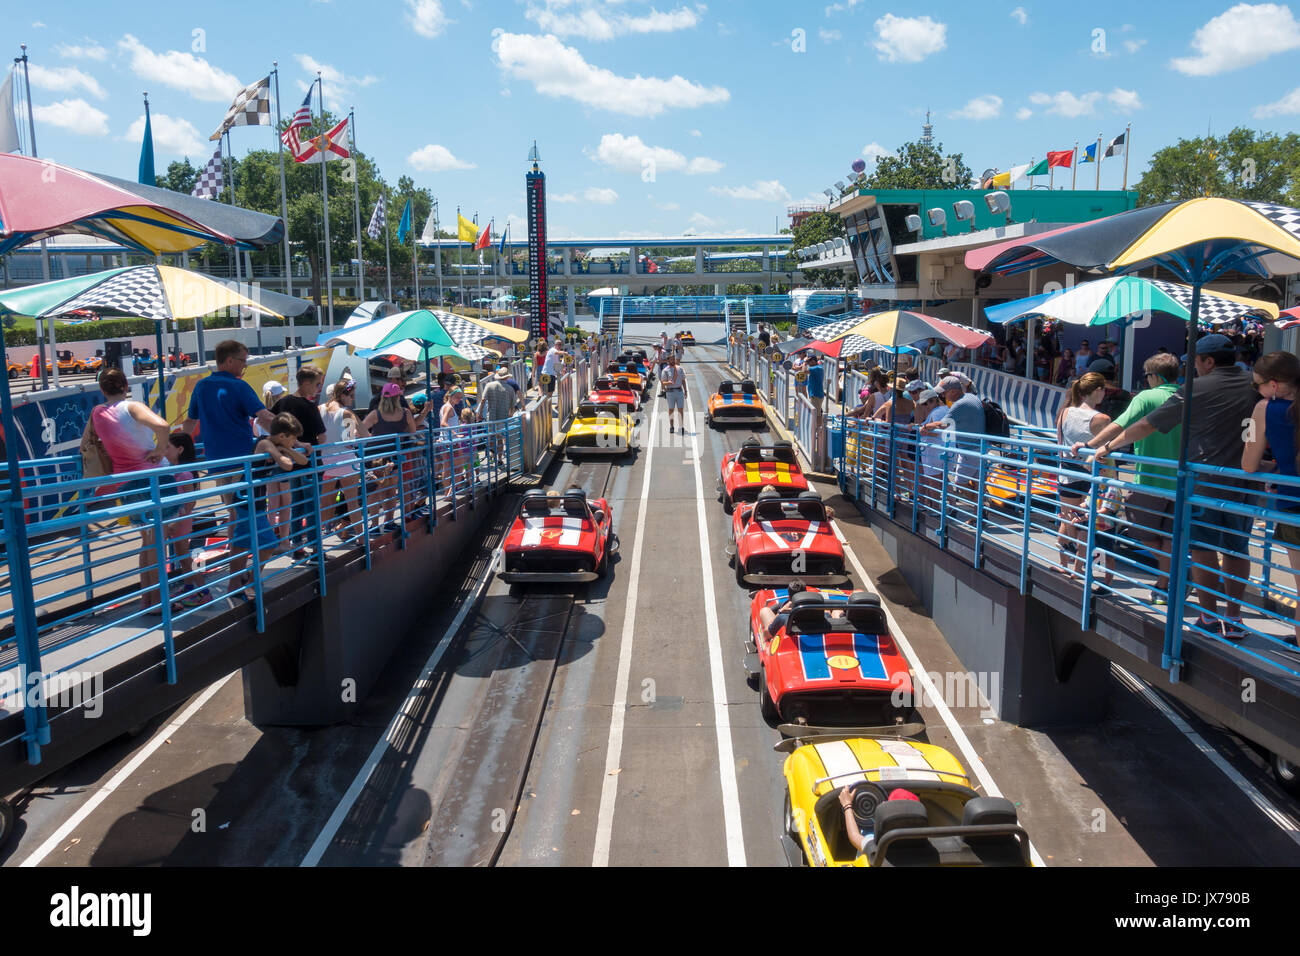 Tomorrowland Speedway in Magic Kingdom Theme Park, Walt Disney World, Orlando, Florida. Stock Photo